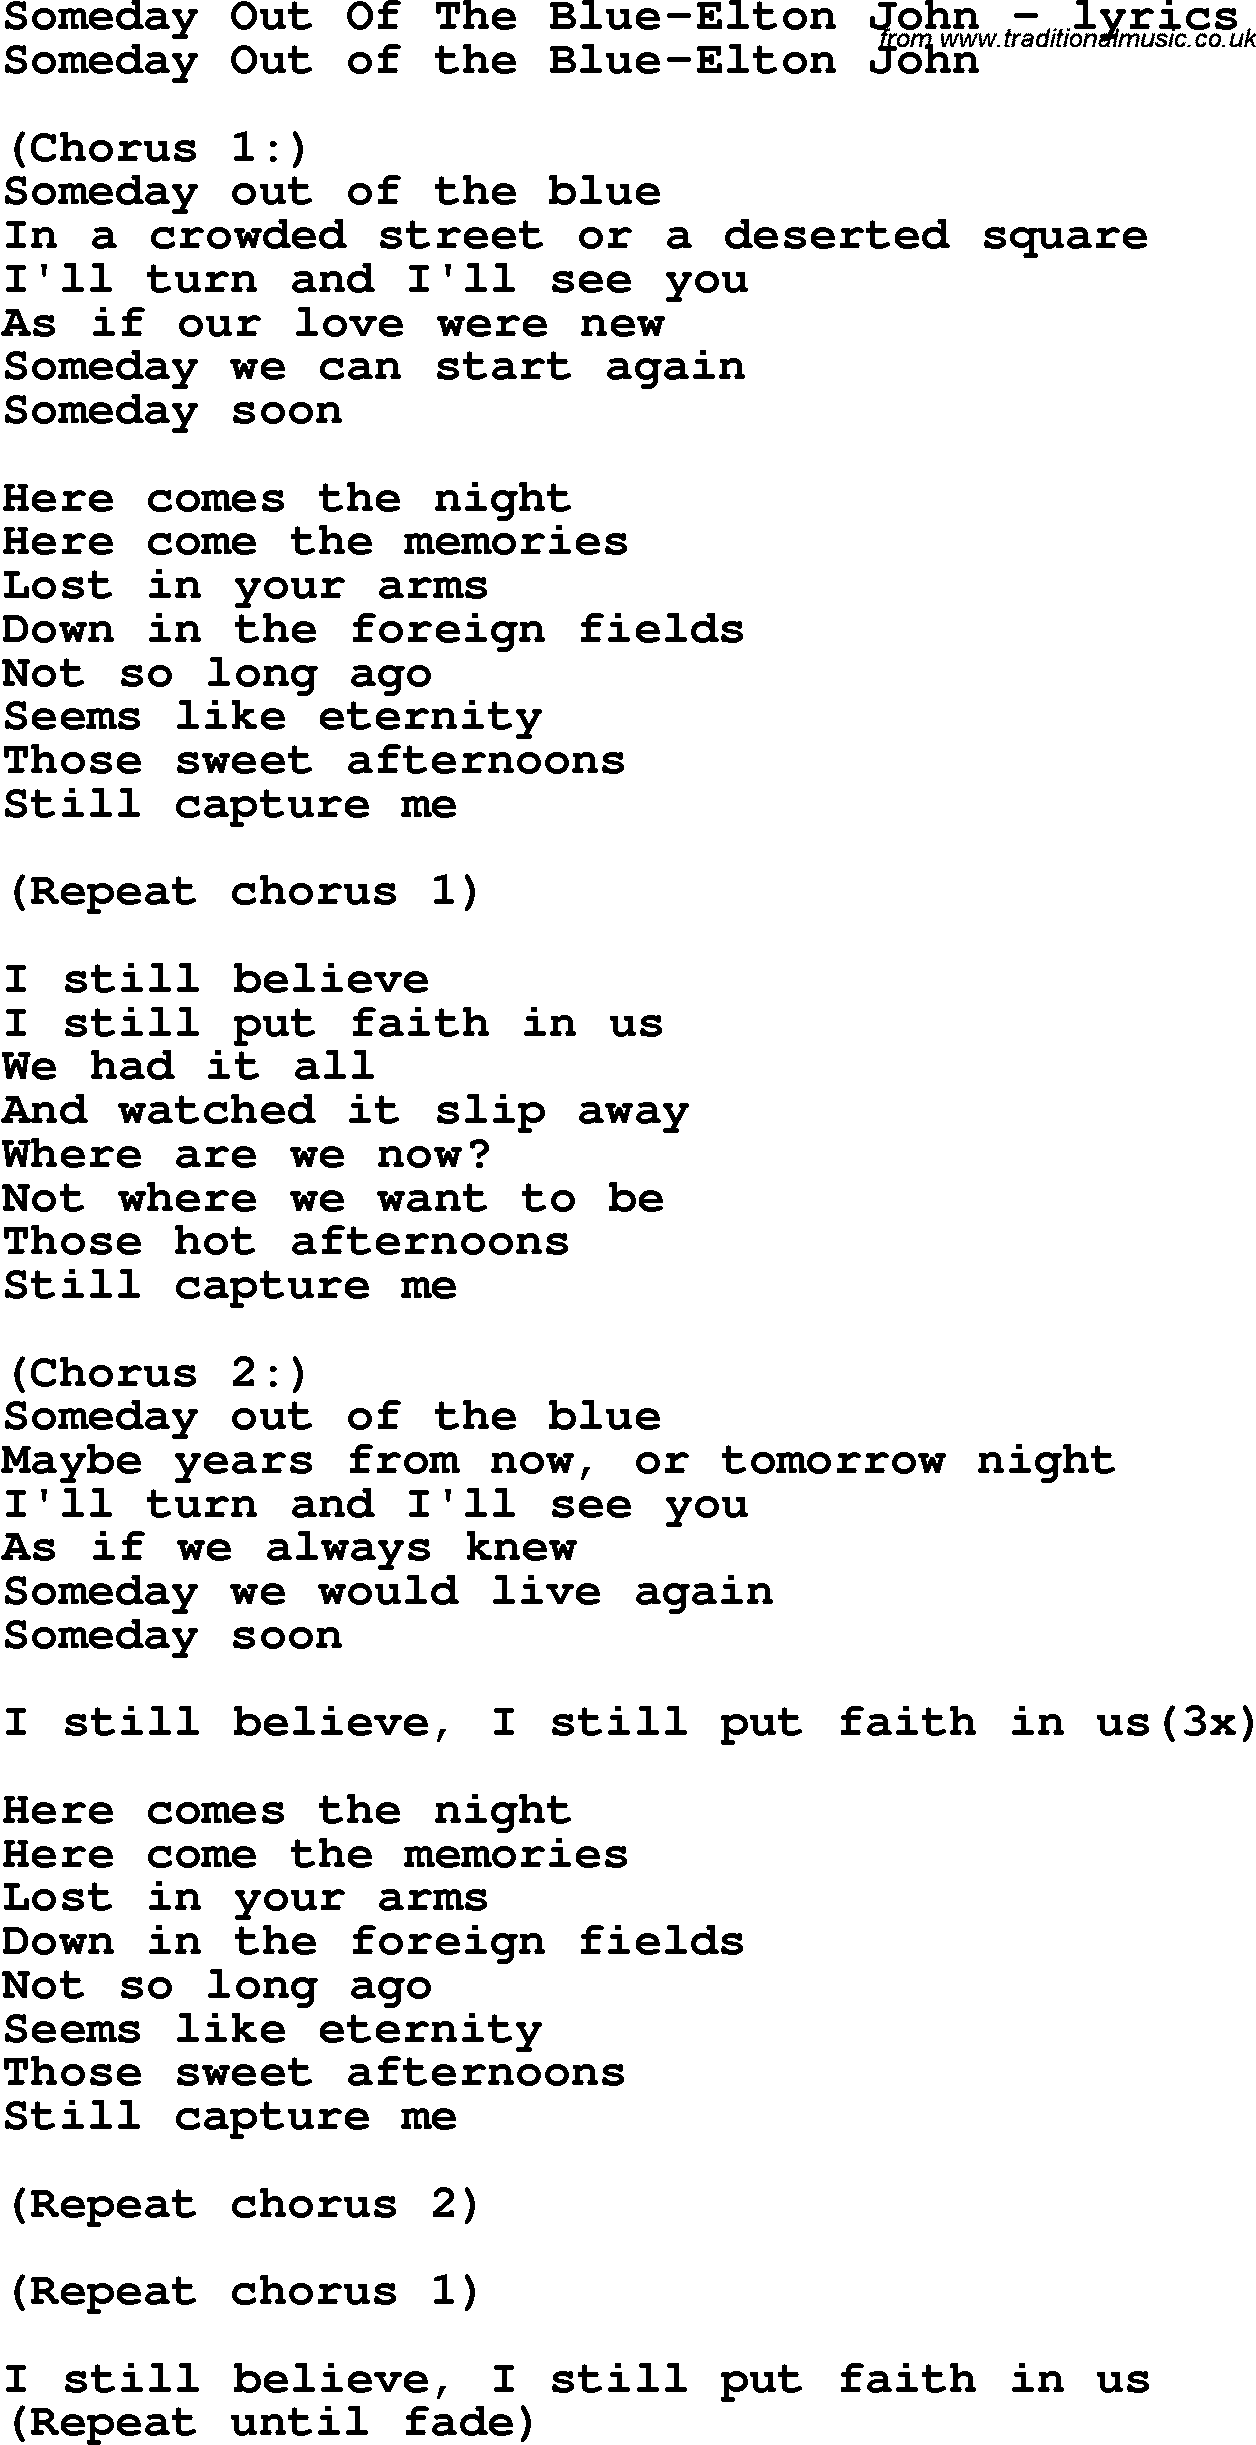 Love Song Lyrics for: Someday Out Of The Blue-Elton John